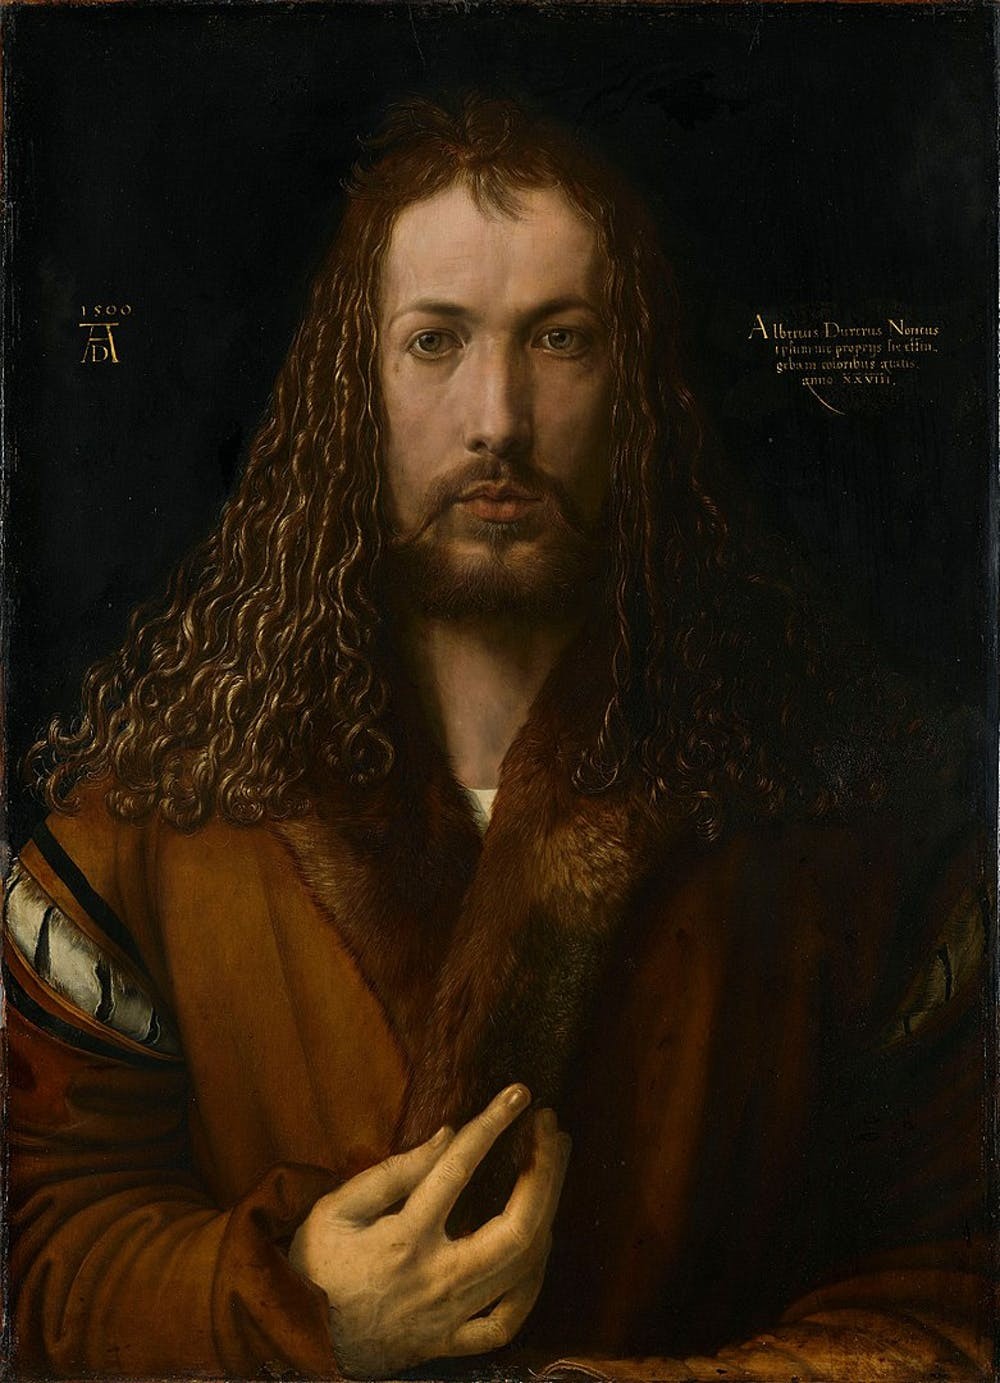 Autorretrato, de Albrecht Dürer, 1500. (Foto: Wikimedia Commons)